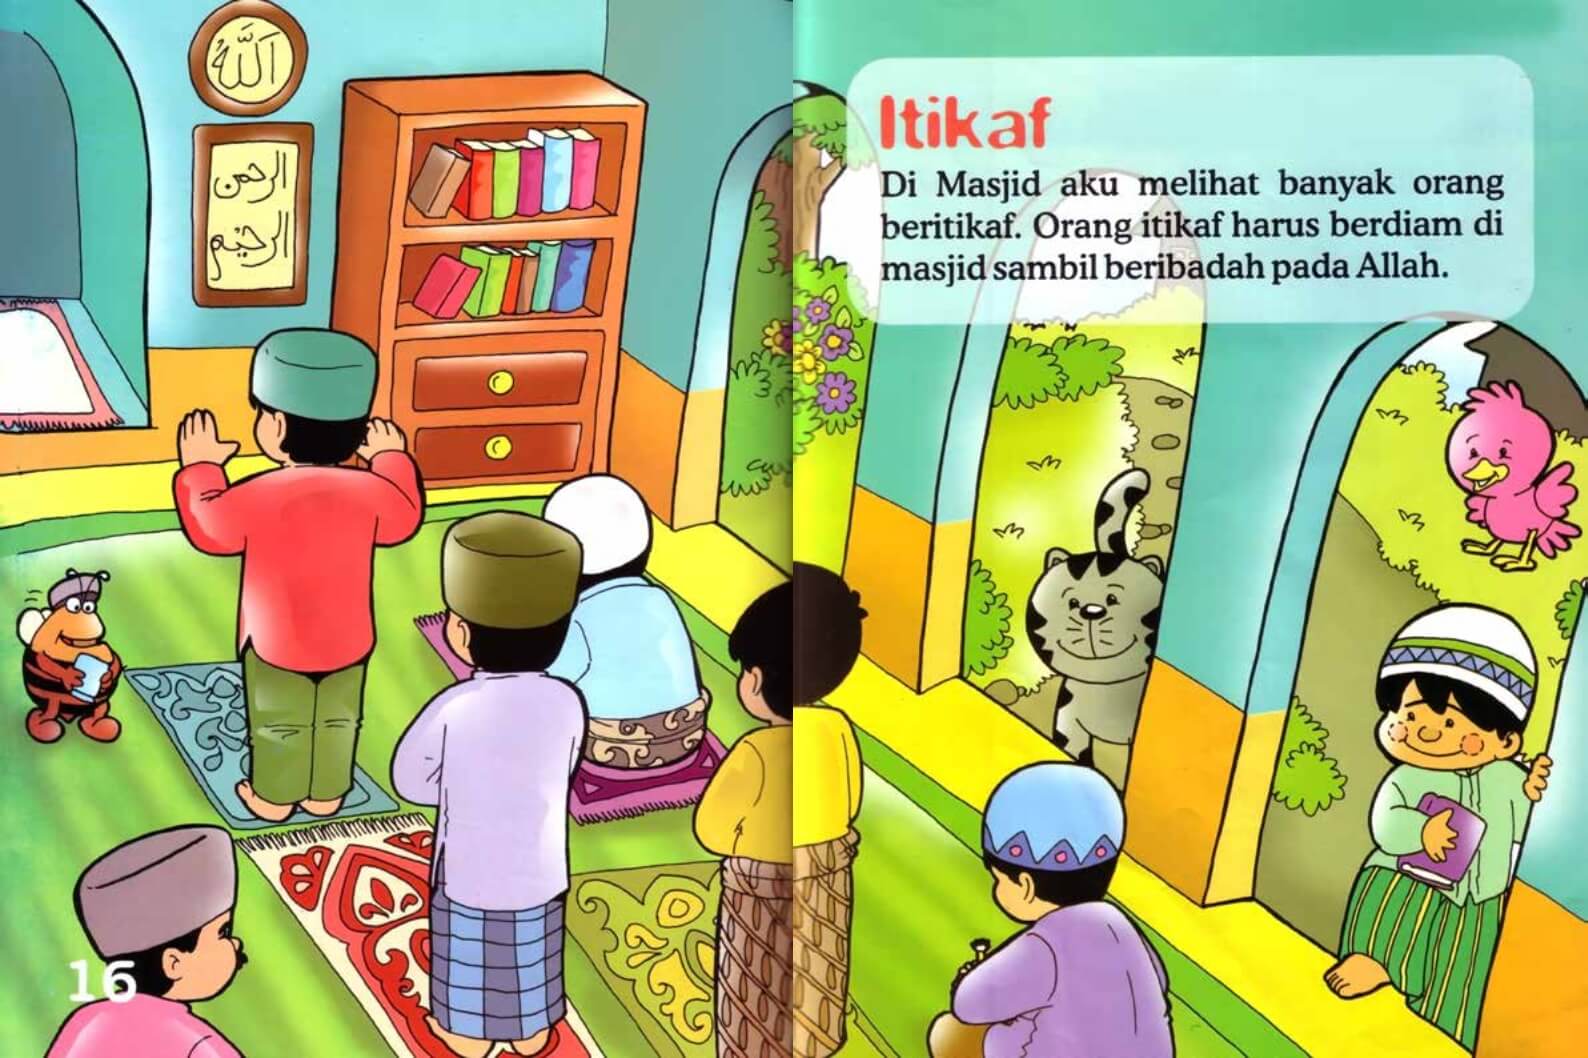 Ebook Seri Fikih Anak, Asyiknya Aku Puasa Ramadhan, Itikaf (9)